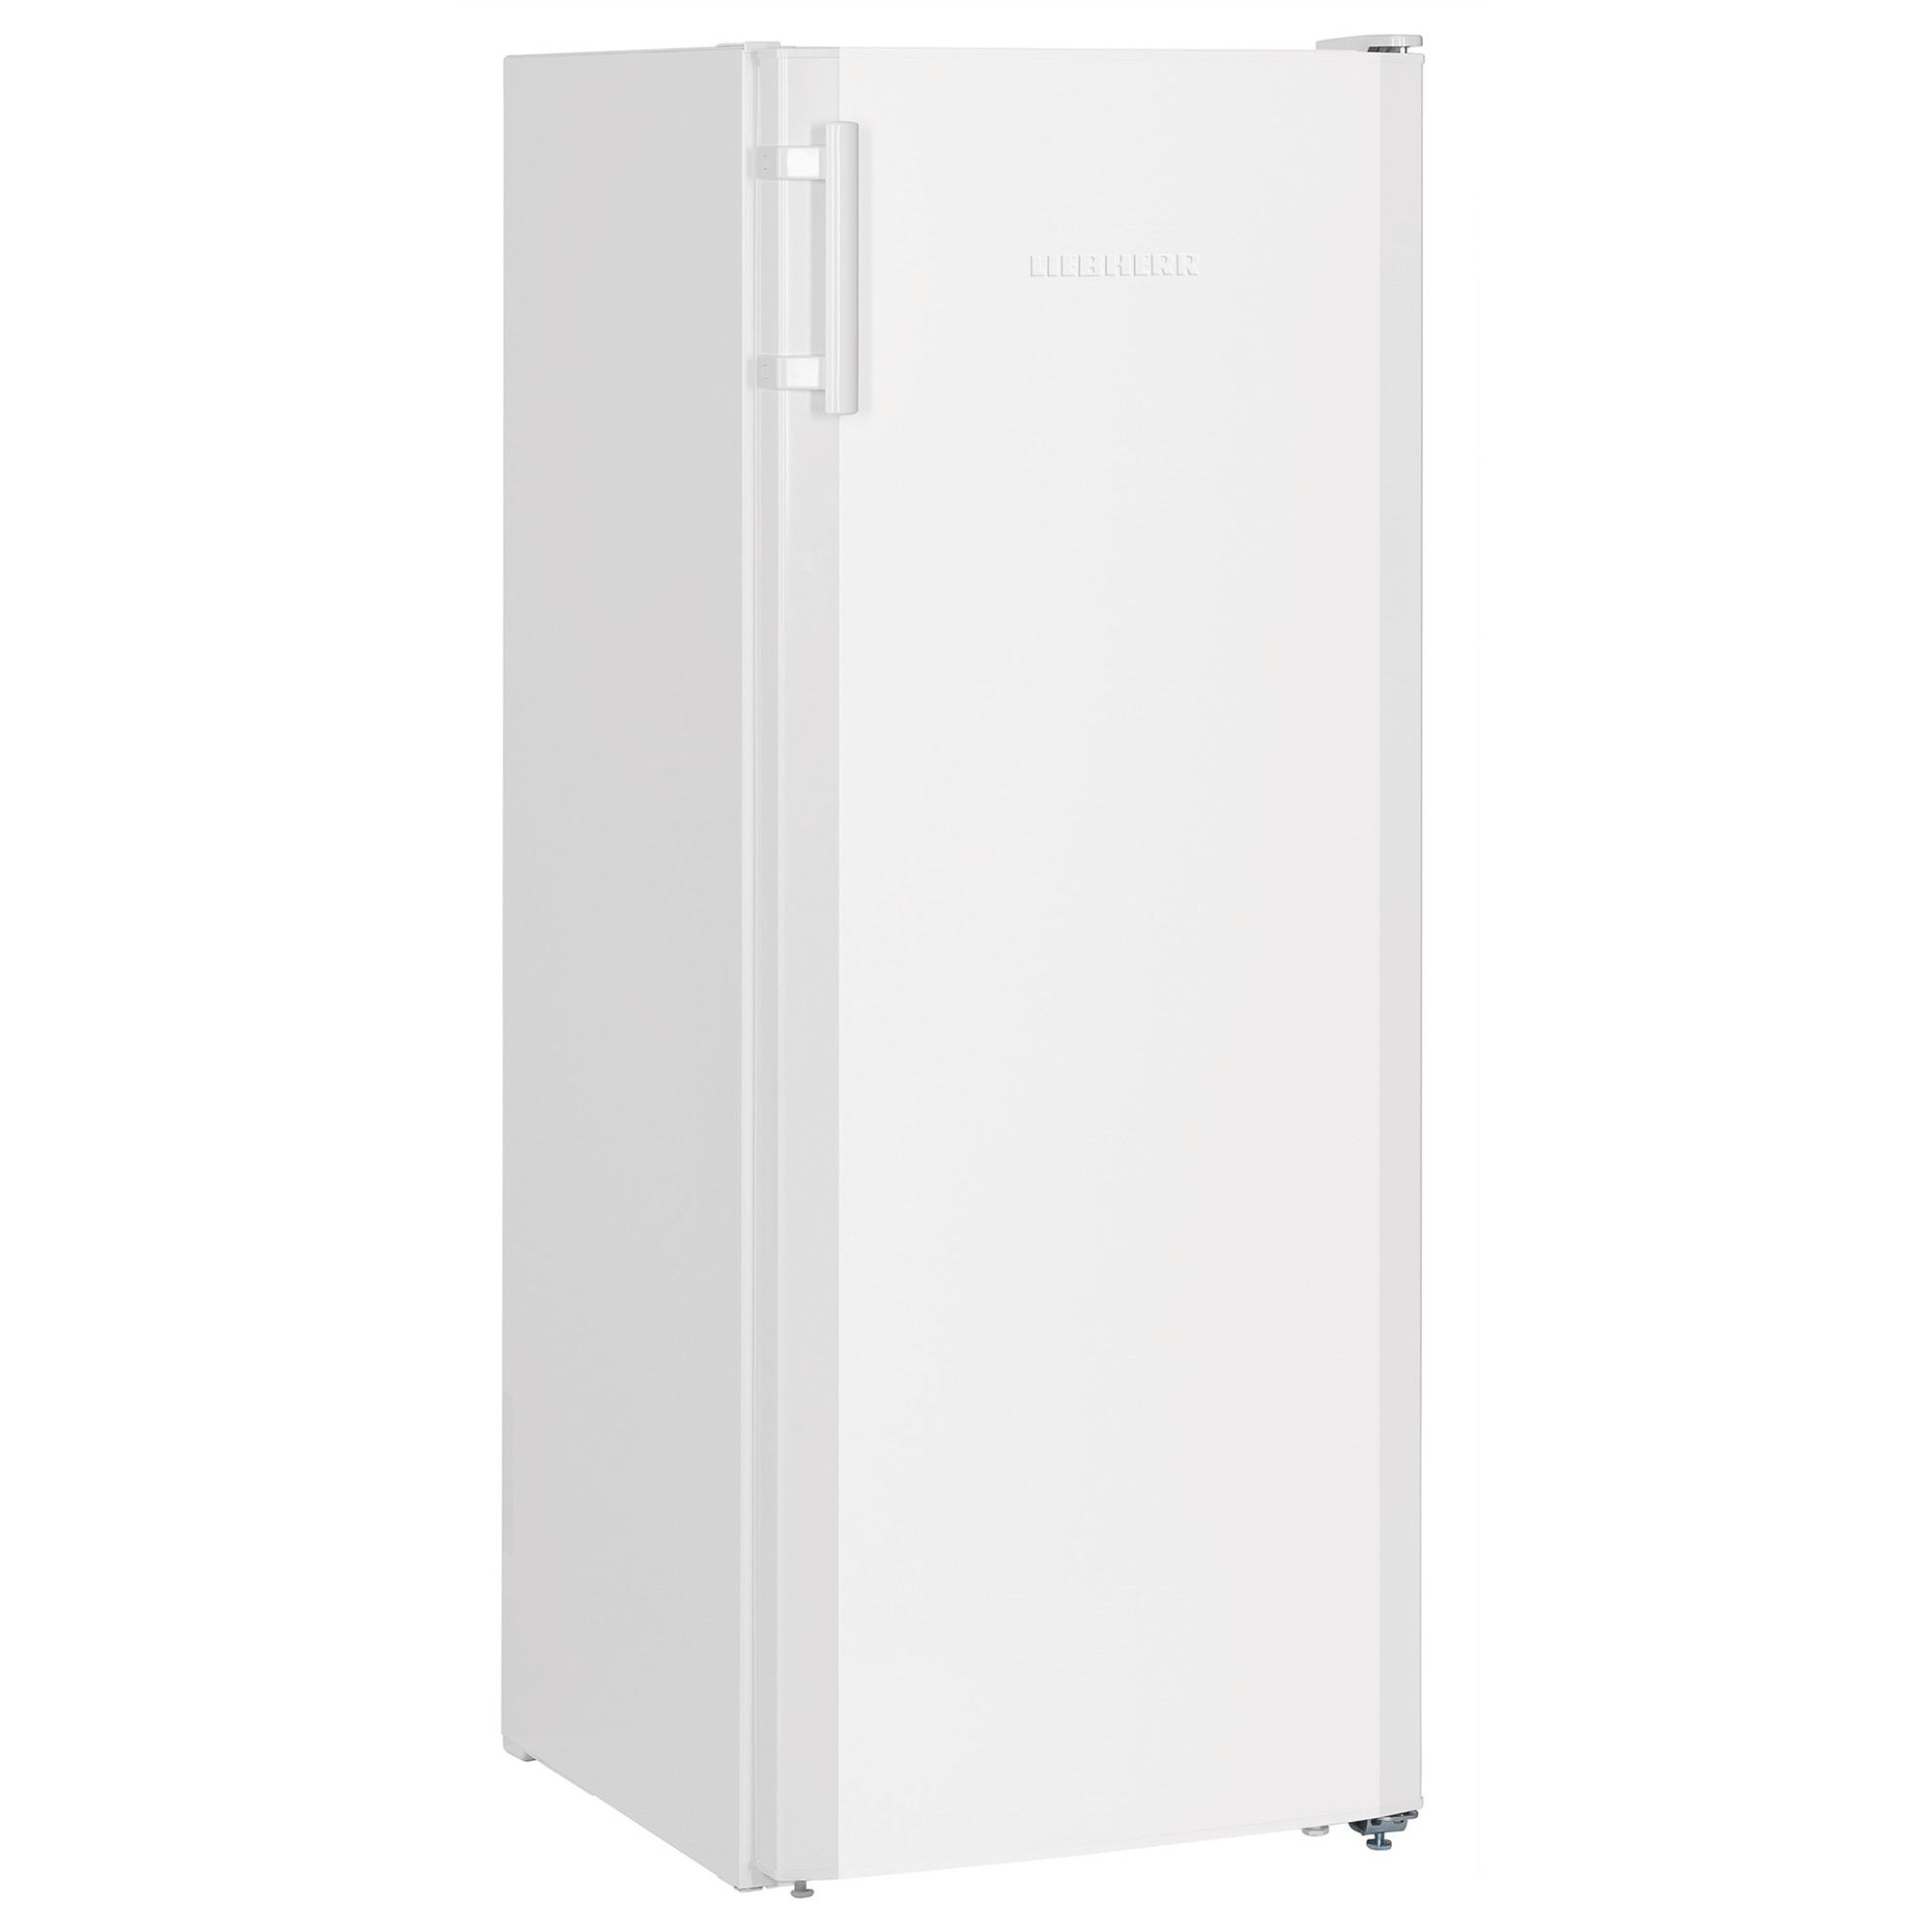 Хладилник Liebherr K 2804 с обем от 250 л.